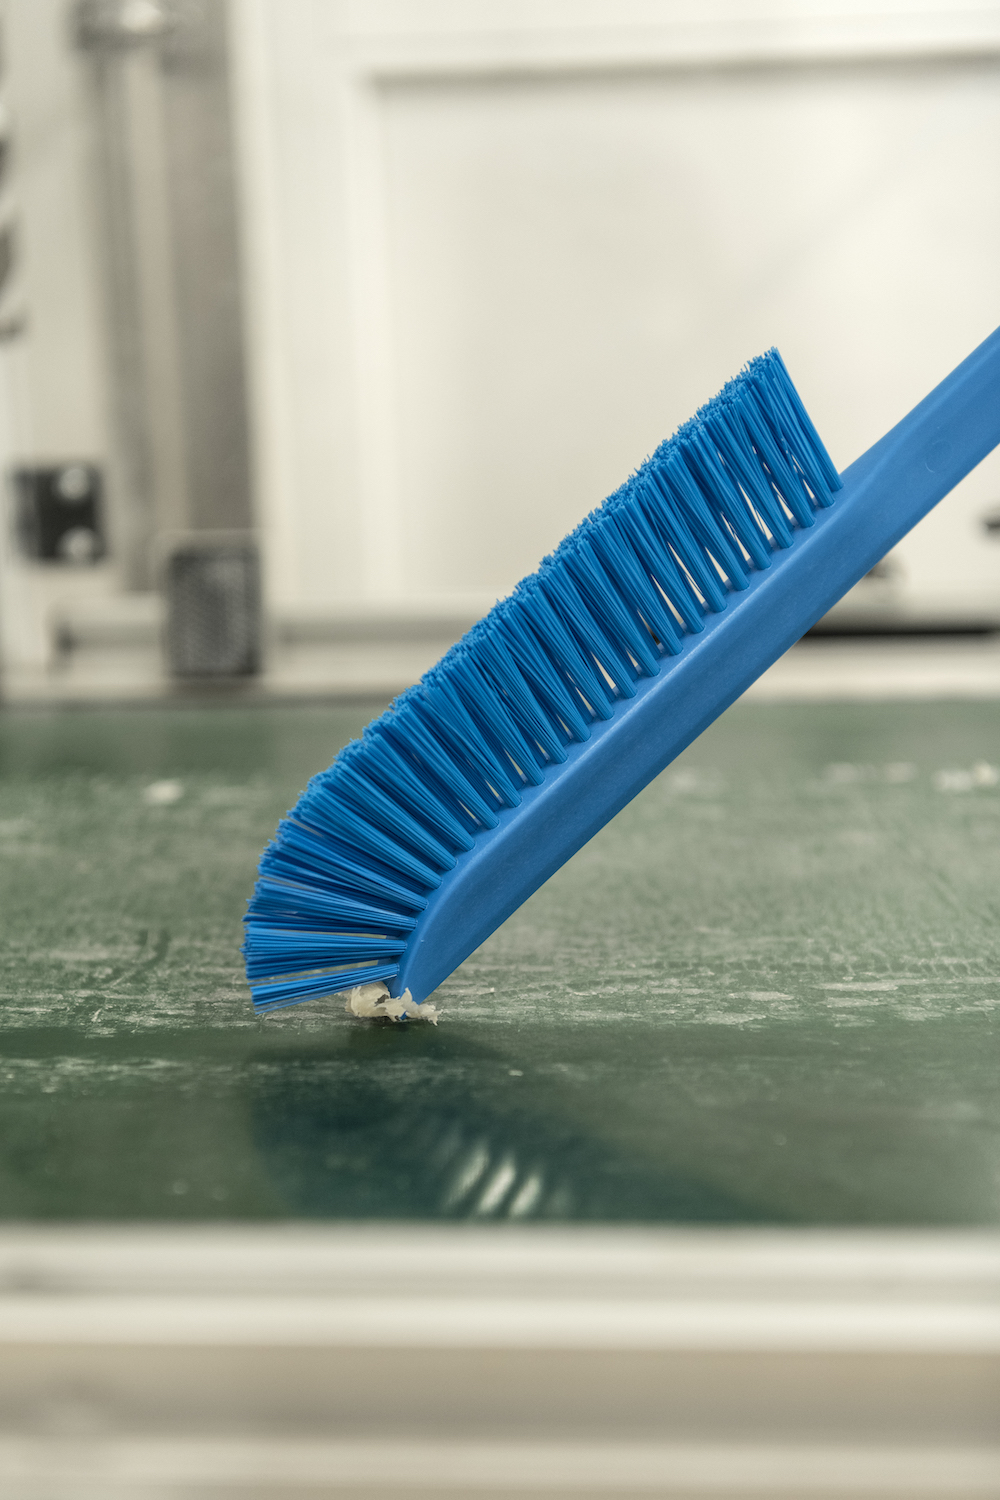 NEW Vikan 4197n Ultra-Slim Cleaning Brush with Long Handle, 600 mm, Medium